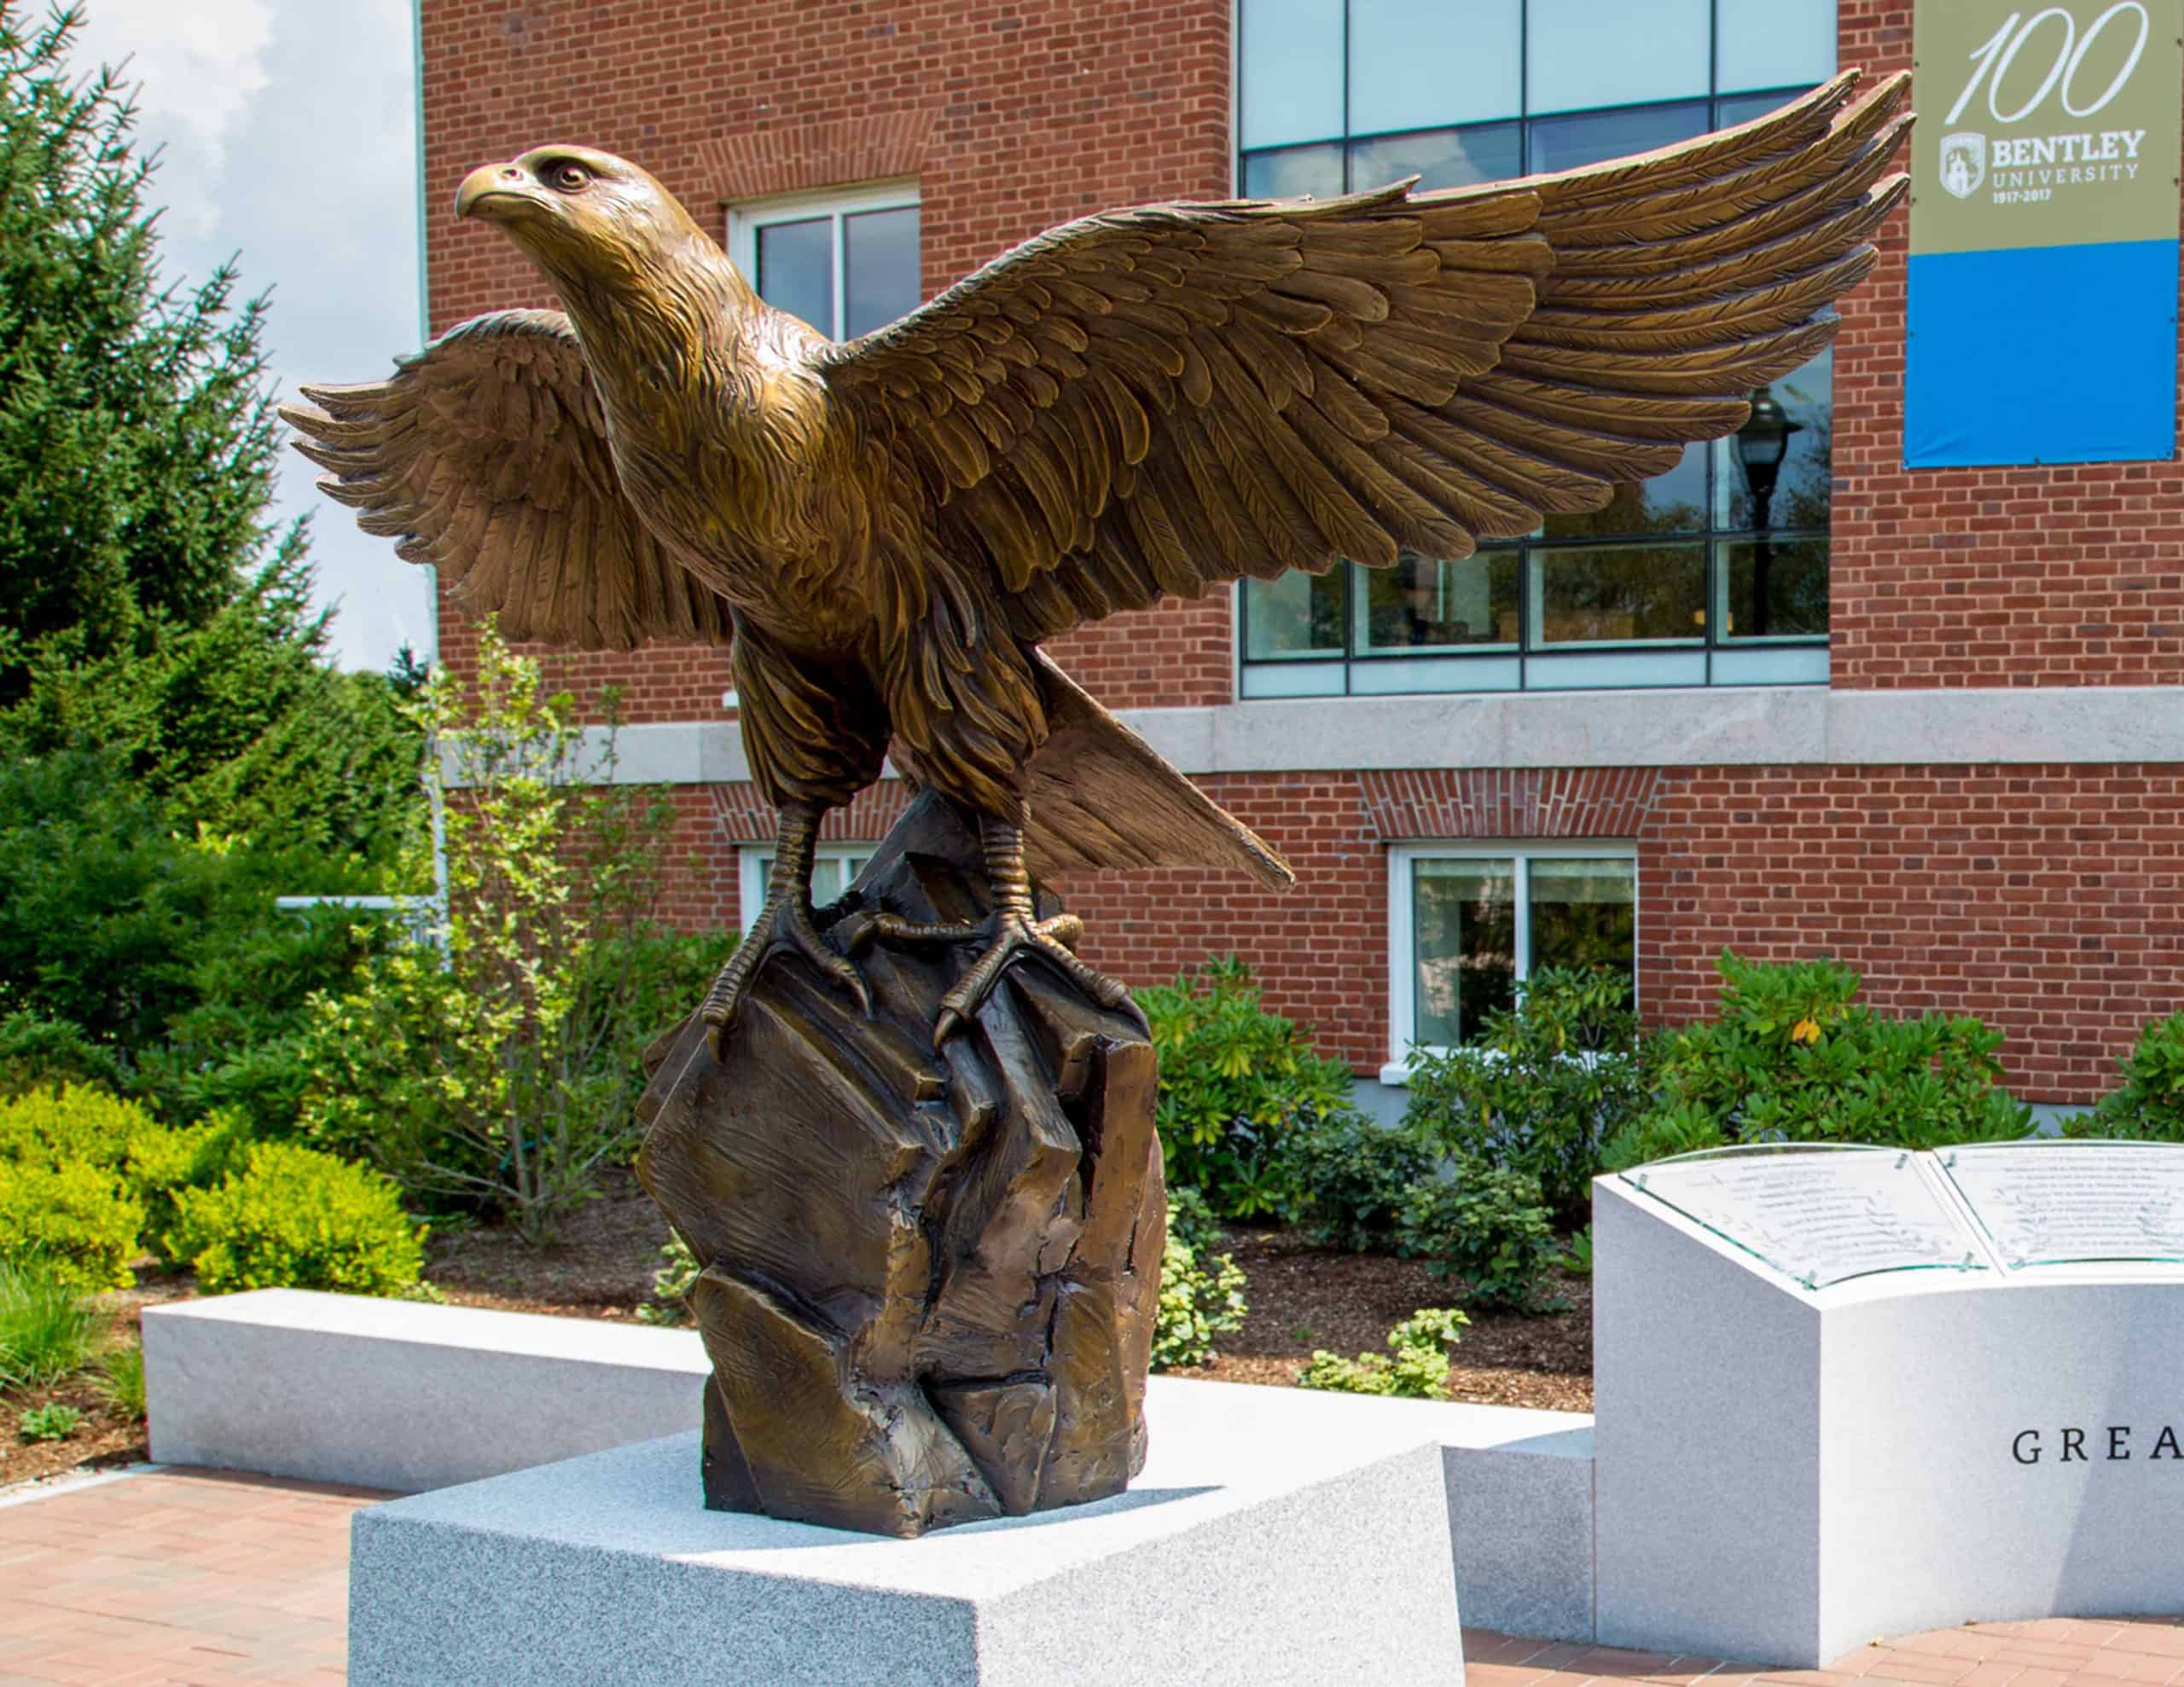 Bentley University Falcon Sculpture